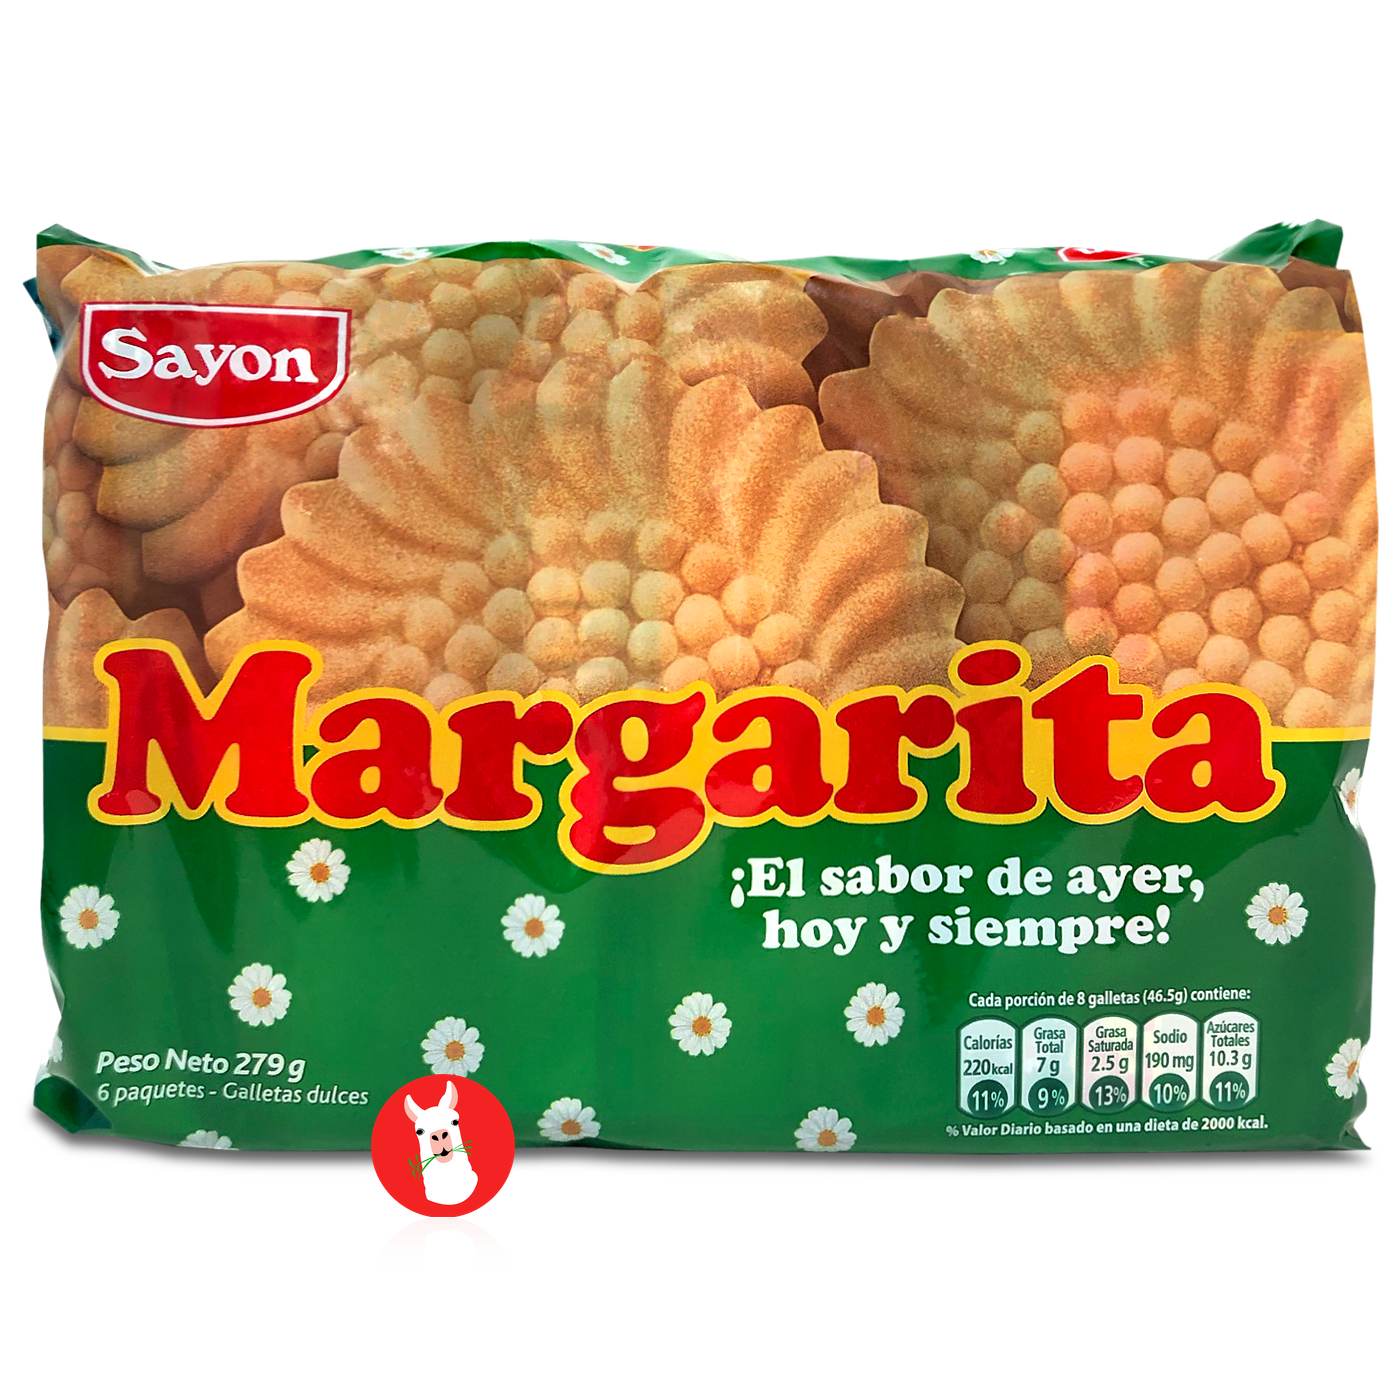 https://peruchosfood.com/wp-content/uploads/2020/11/Sayon-Galletas-Margarita-6-Pack-Bag.jpg